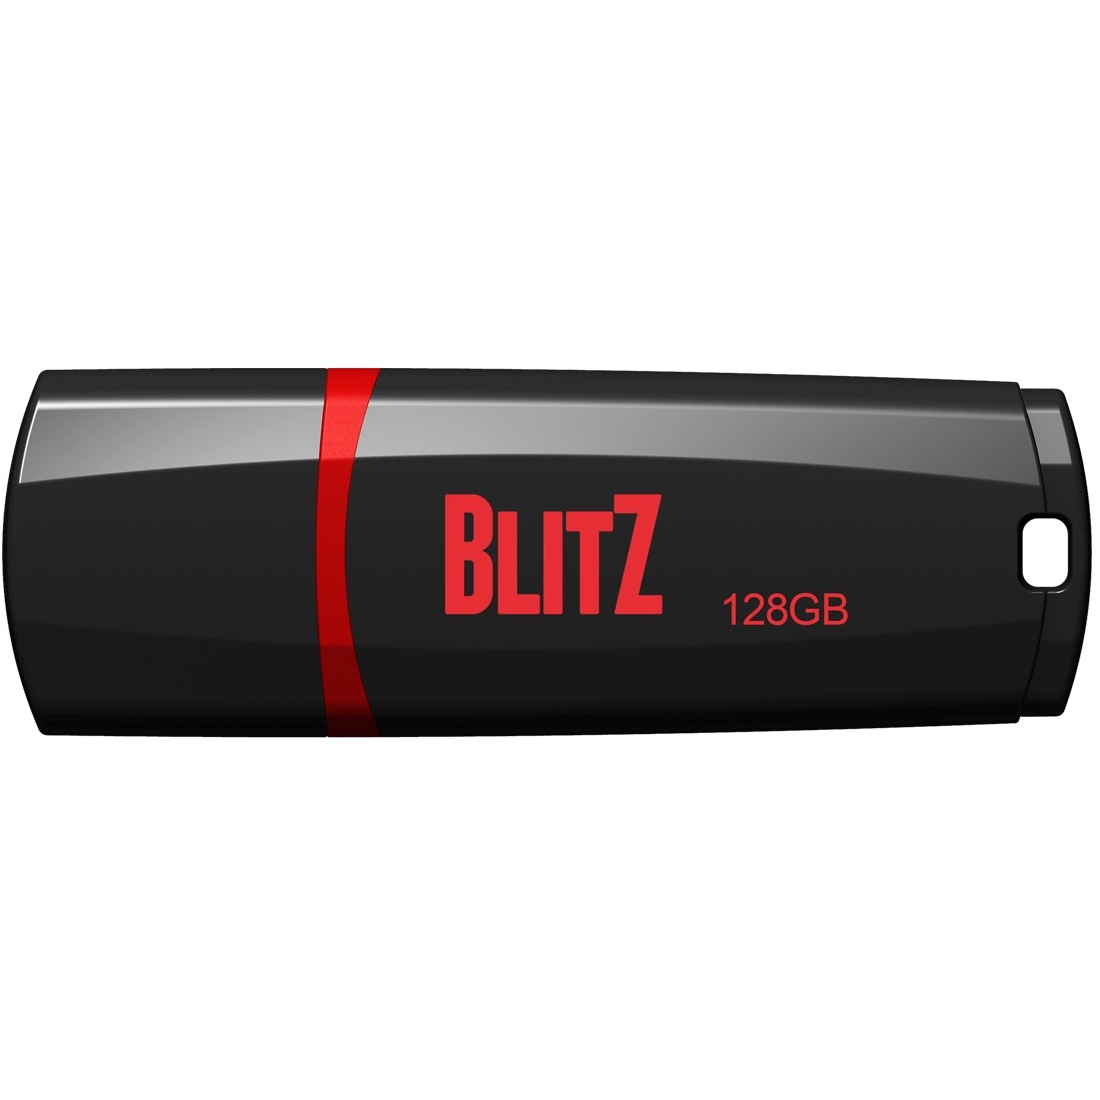 Patriot Blitz - USB flash drive - 128 GB - USB 3.1 - black, red - image 2 of 2